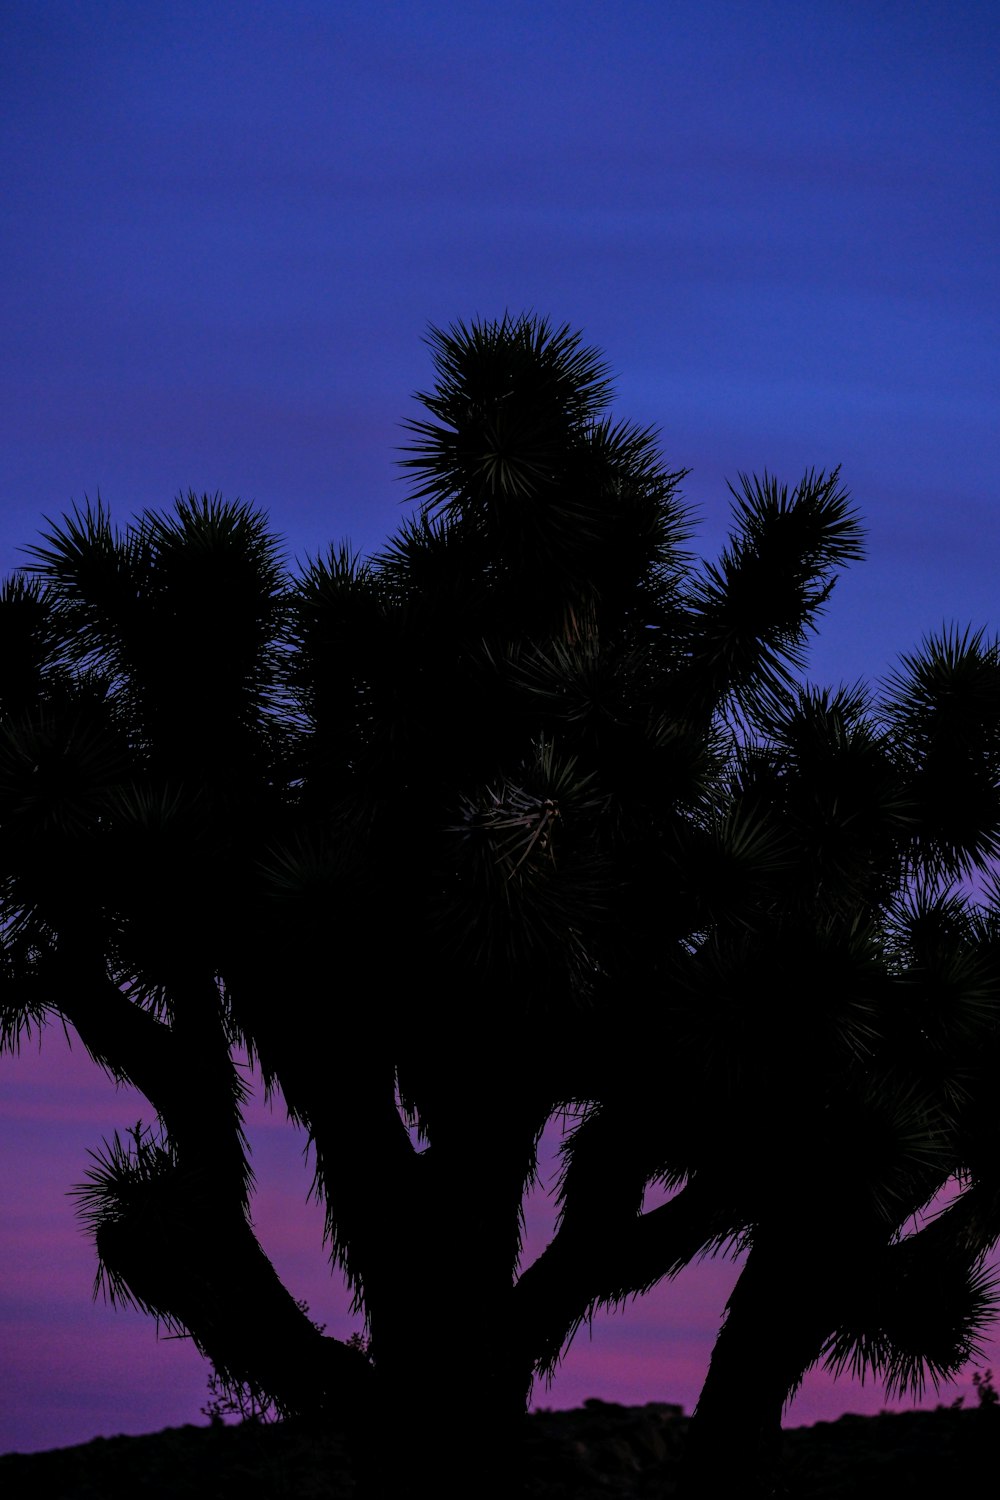 a silhouette of a joshua tree against a purple and blue sky